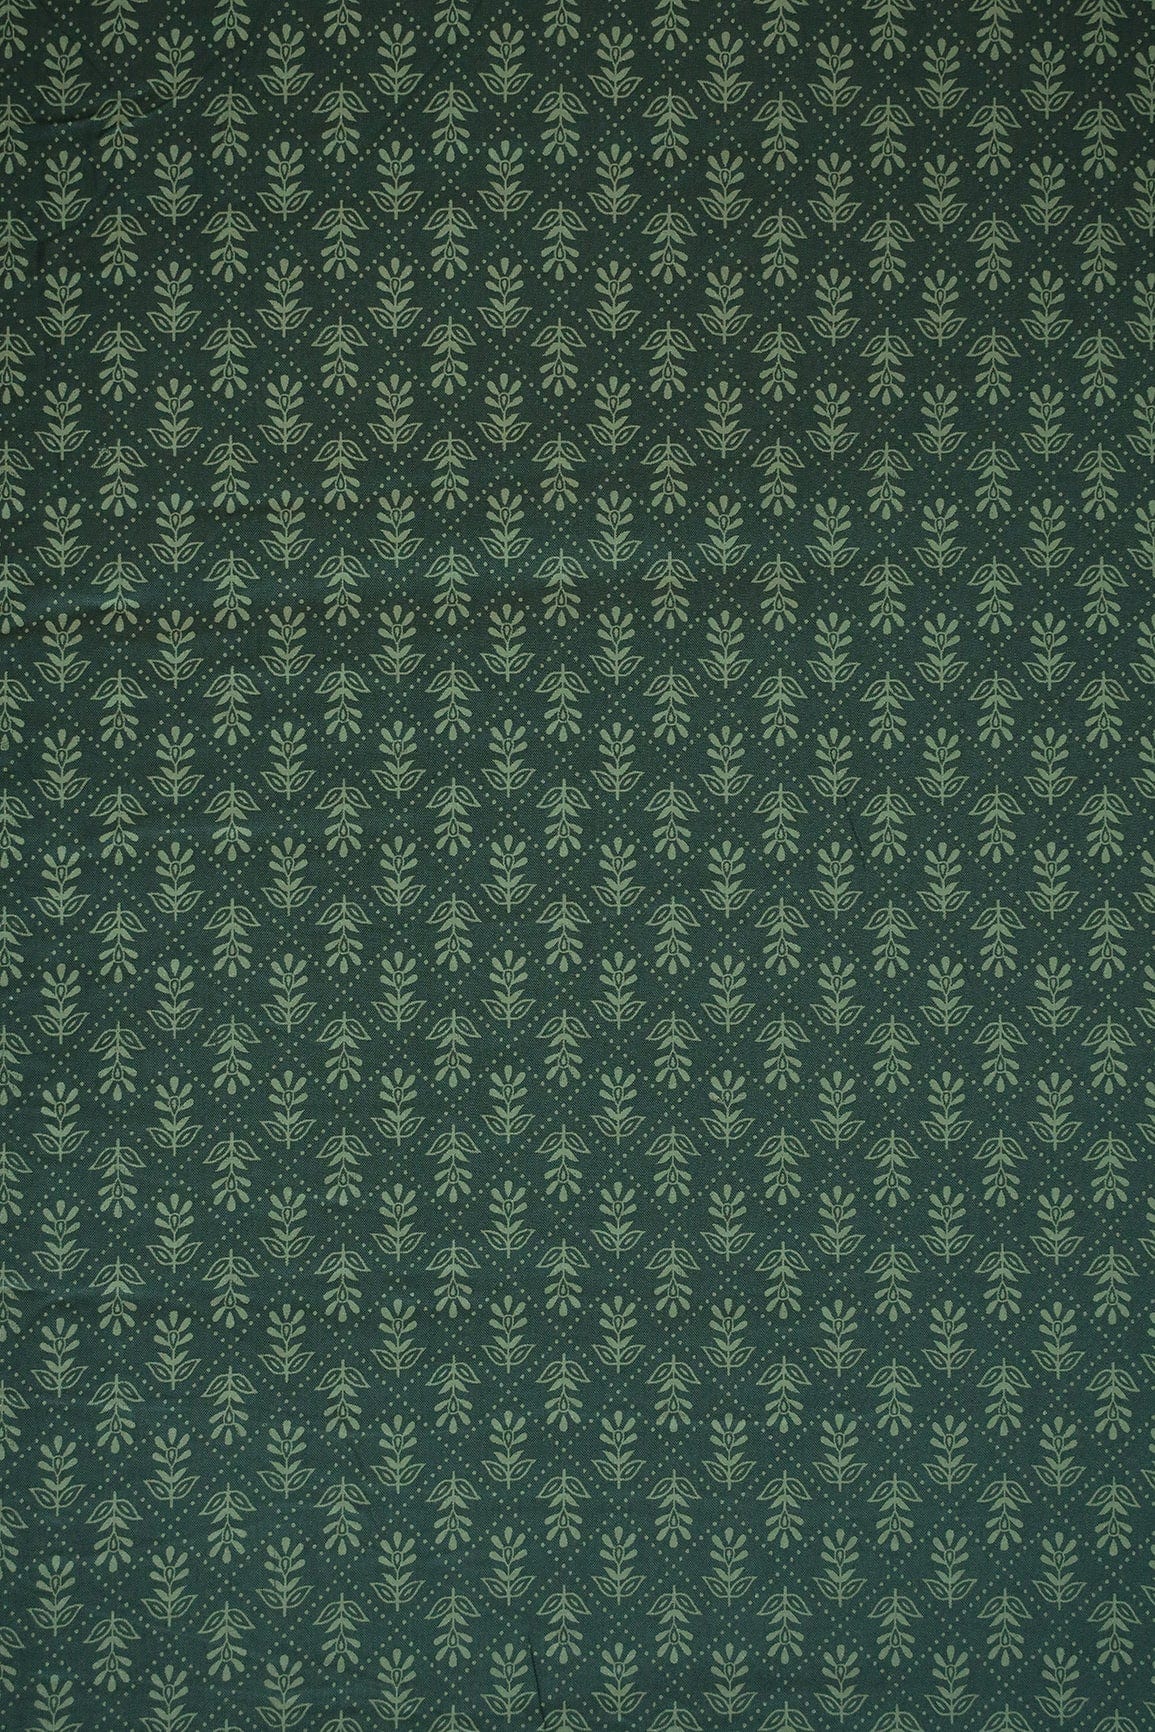 doeraa Prints Bottle Green Small Floral Booti Pattern Screen Print Cotton Rayon Fabric